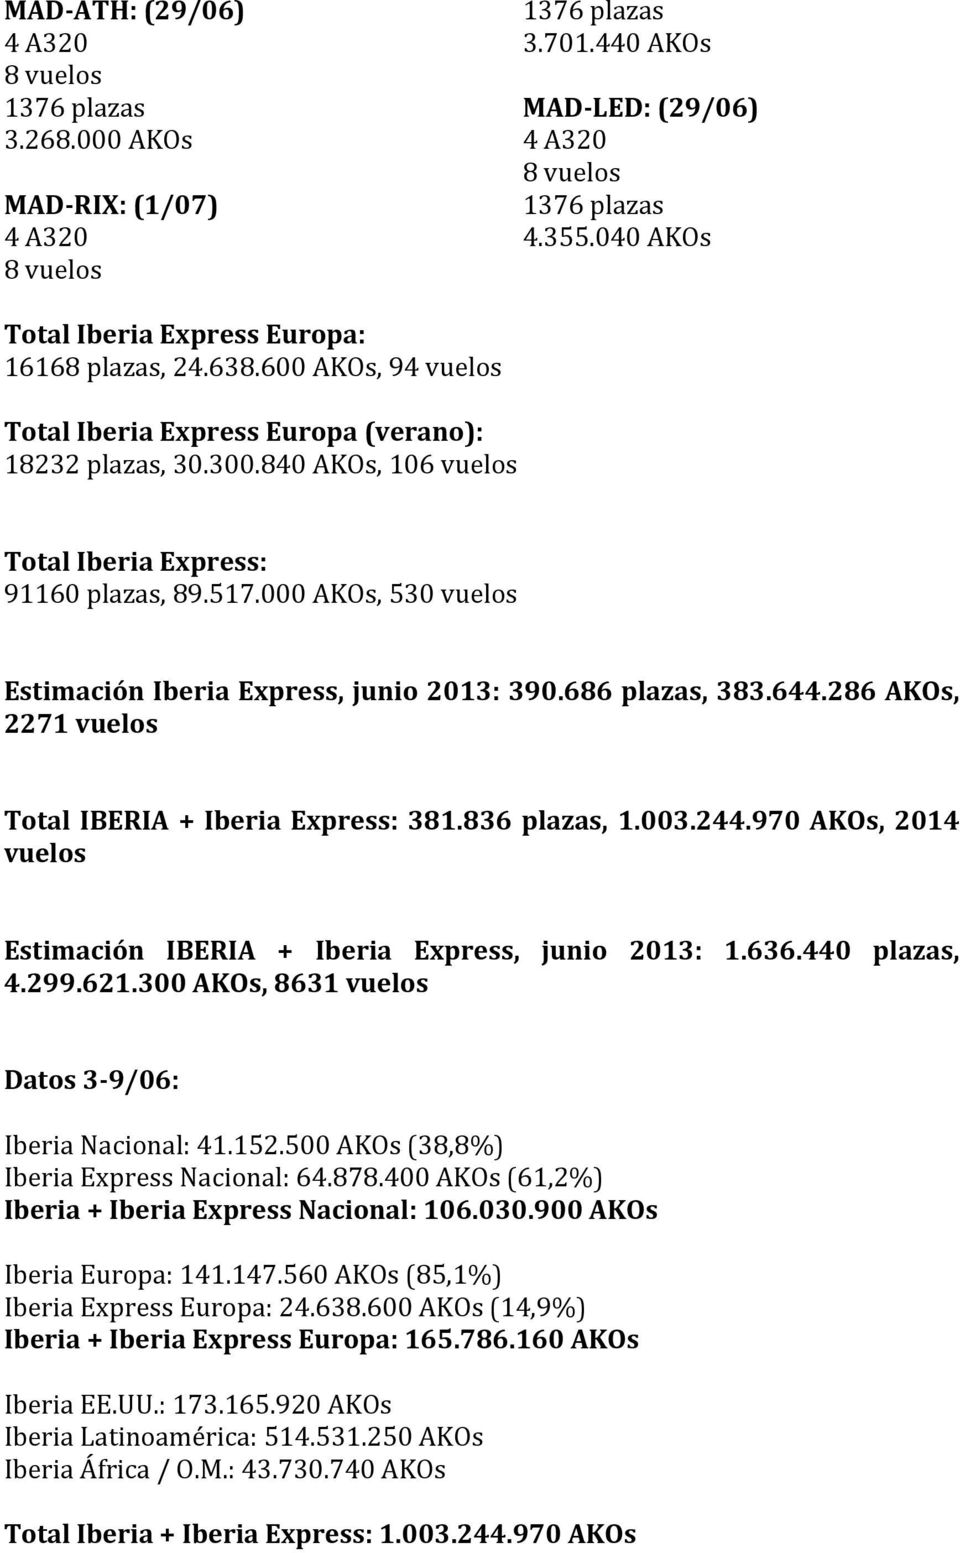 644.286AOs, 2271vuelos TotalIBERIA+ Iberia Express: 381.836 plazas, 1.003.244.970 AOs, 2014 vuelos Estimación IBERIA + Iberia Express, junio 2013: 1.636.440 plazas, 4.299.621.